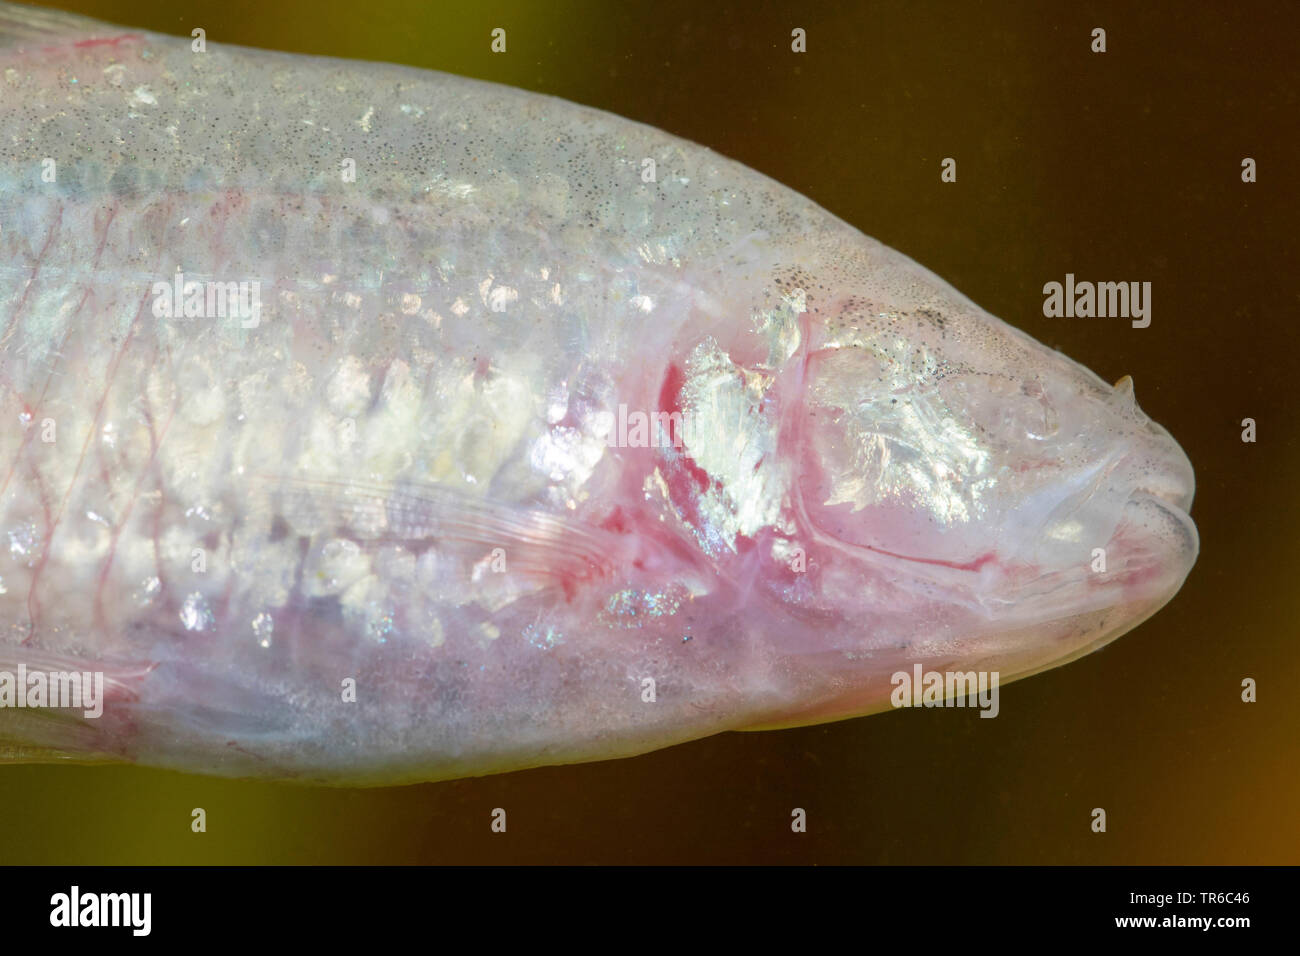 Grotta di cieco tetra, cavefish cieco (Anoptichthys jordani, Astyanax fasciatus mexicanus), ritratto, vista laterale Foto Stock